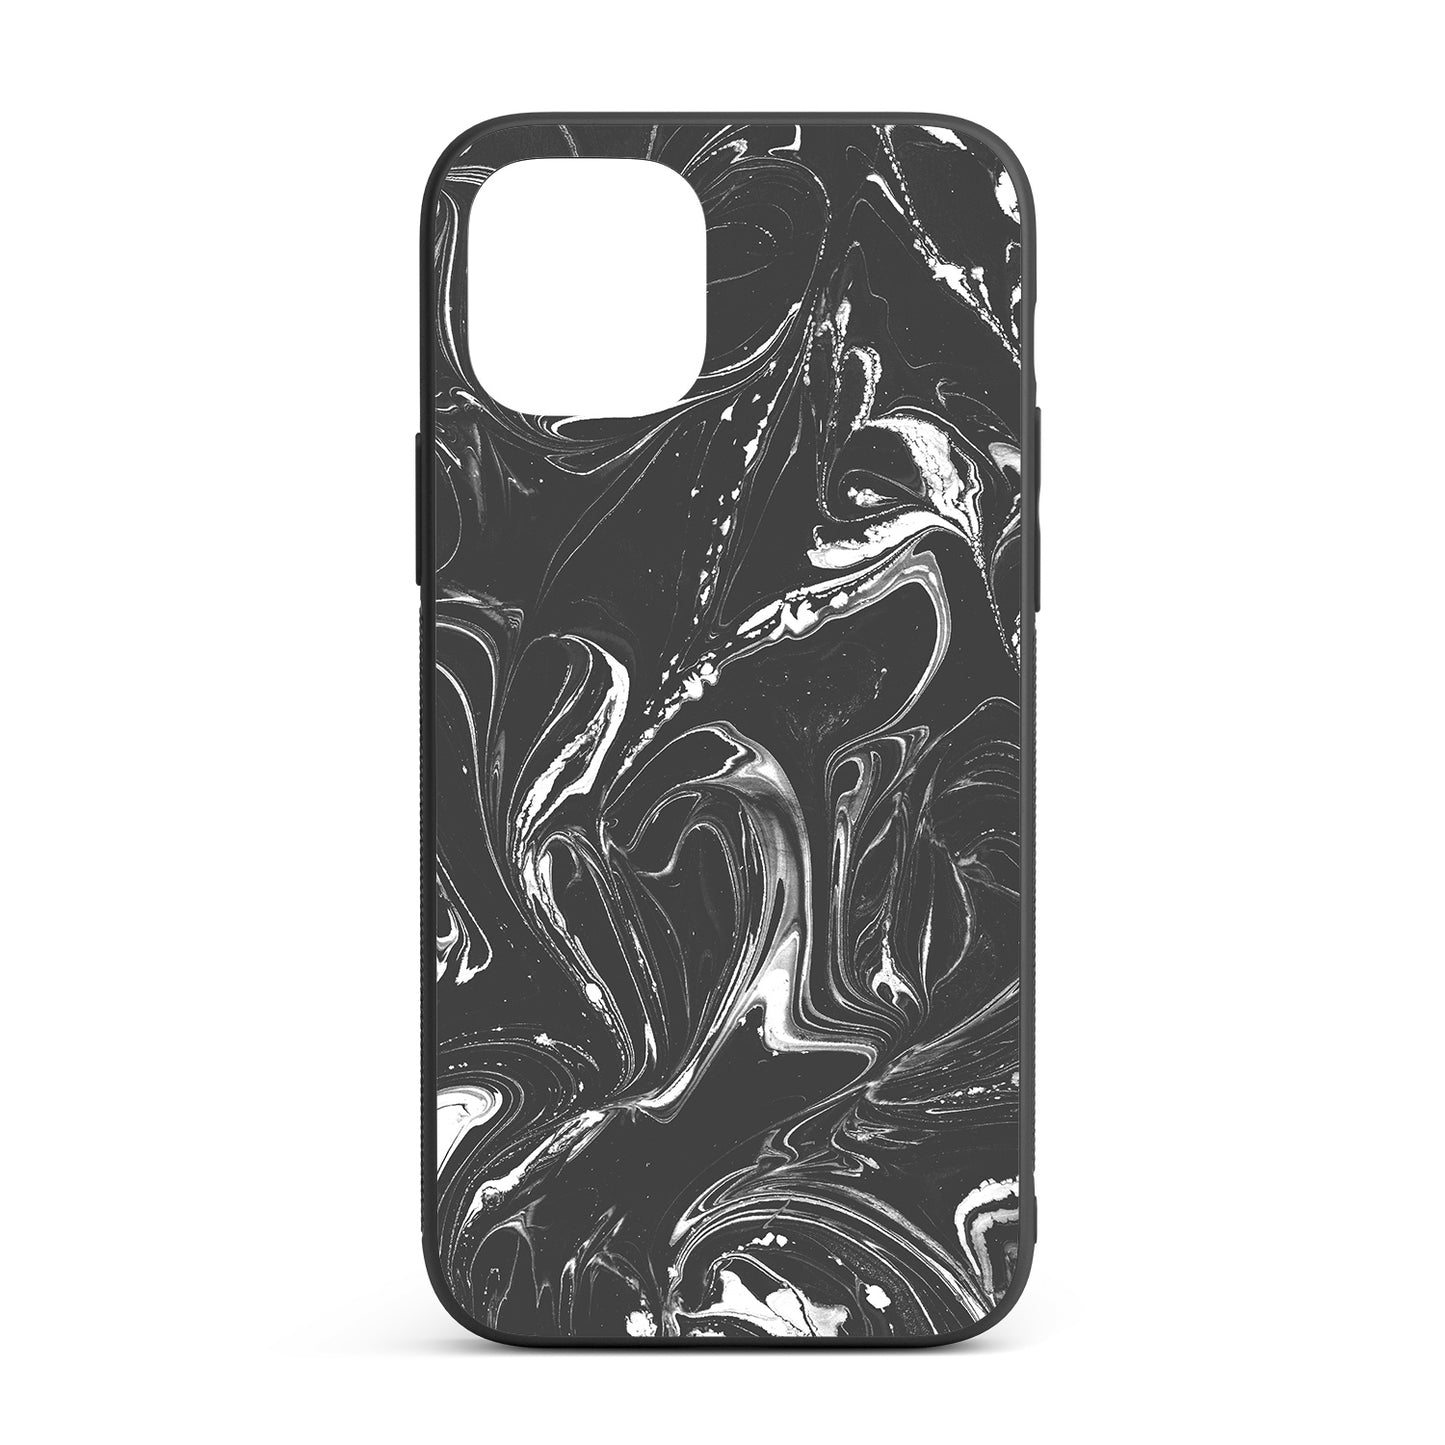 Grey & White liquid paint pattern iPhone glass case